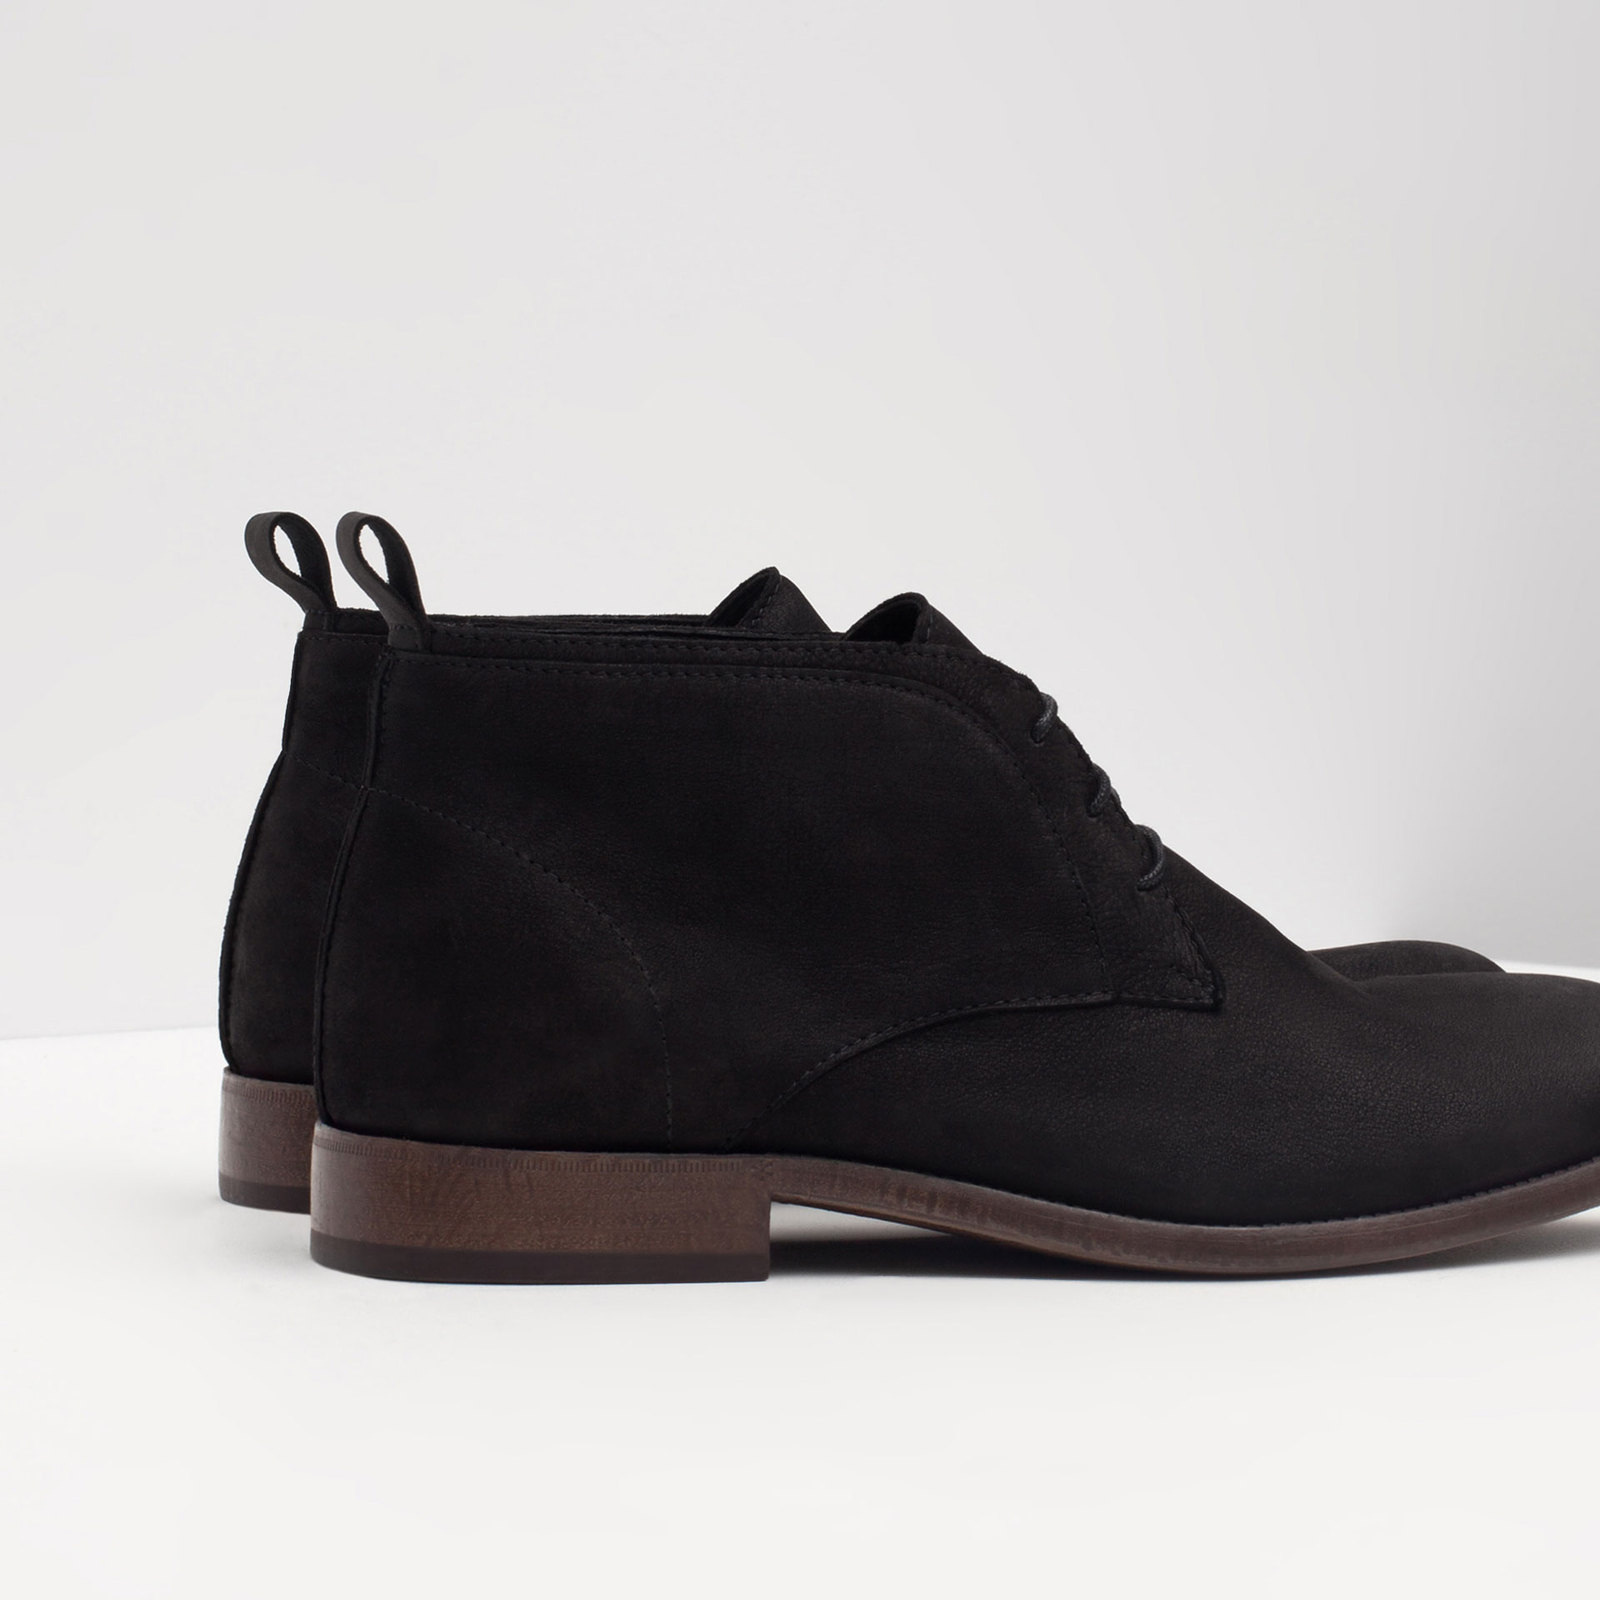 Zara fekete desert boot 2015.10.15 fotója